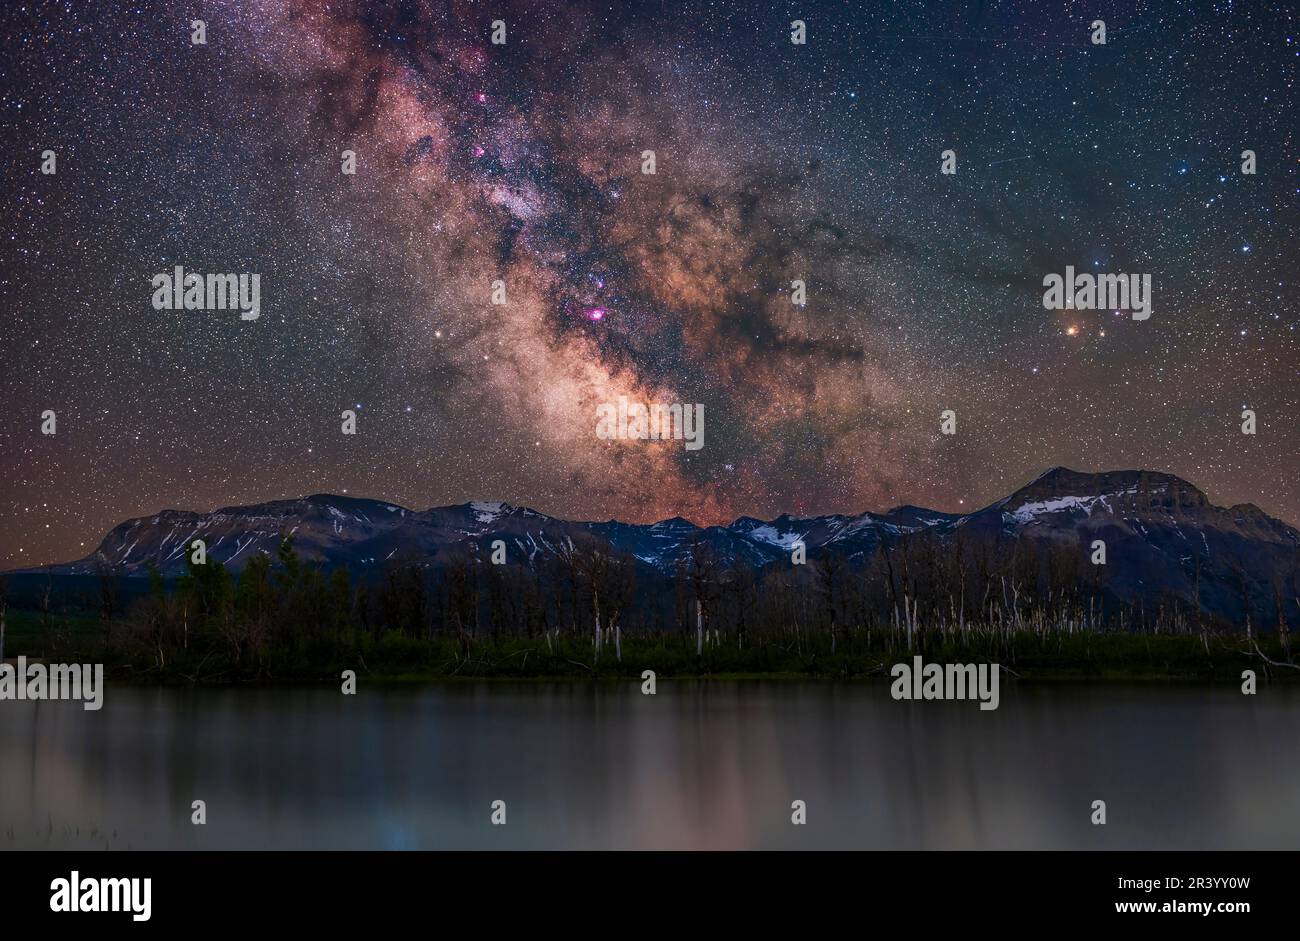 The galactic core region of the Milky Way over Maskinonge Pond in Alberta, Canada. Stock Photo